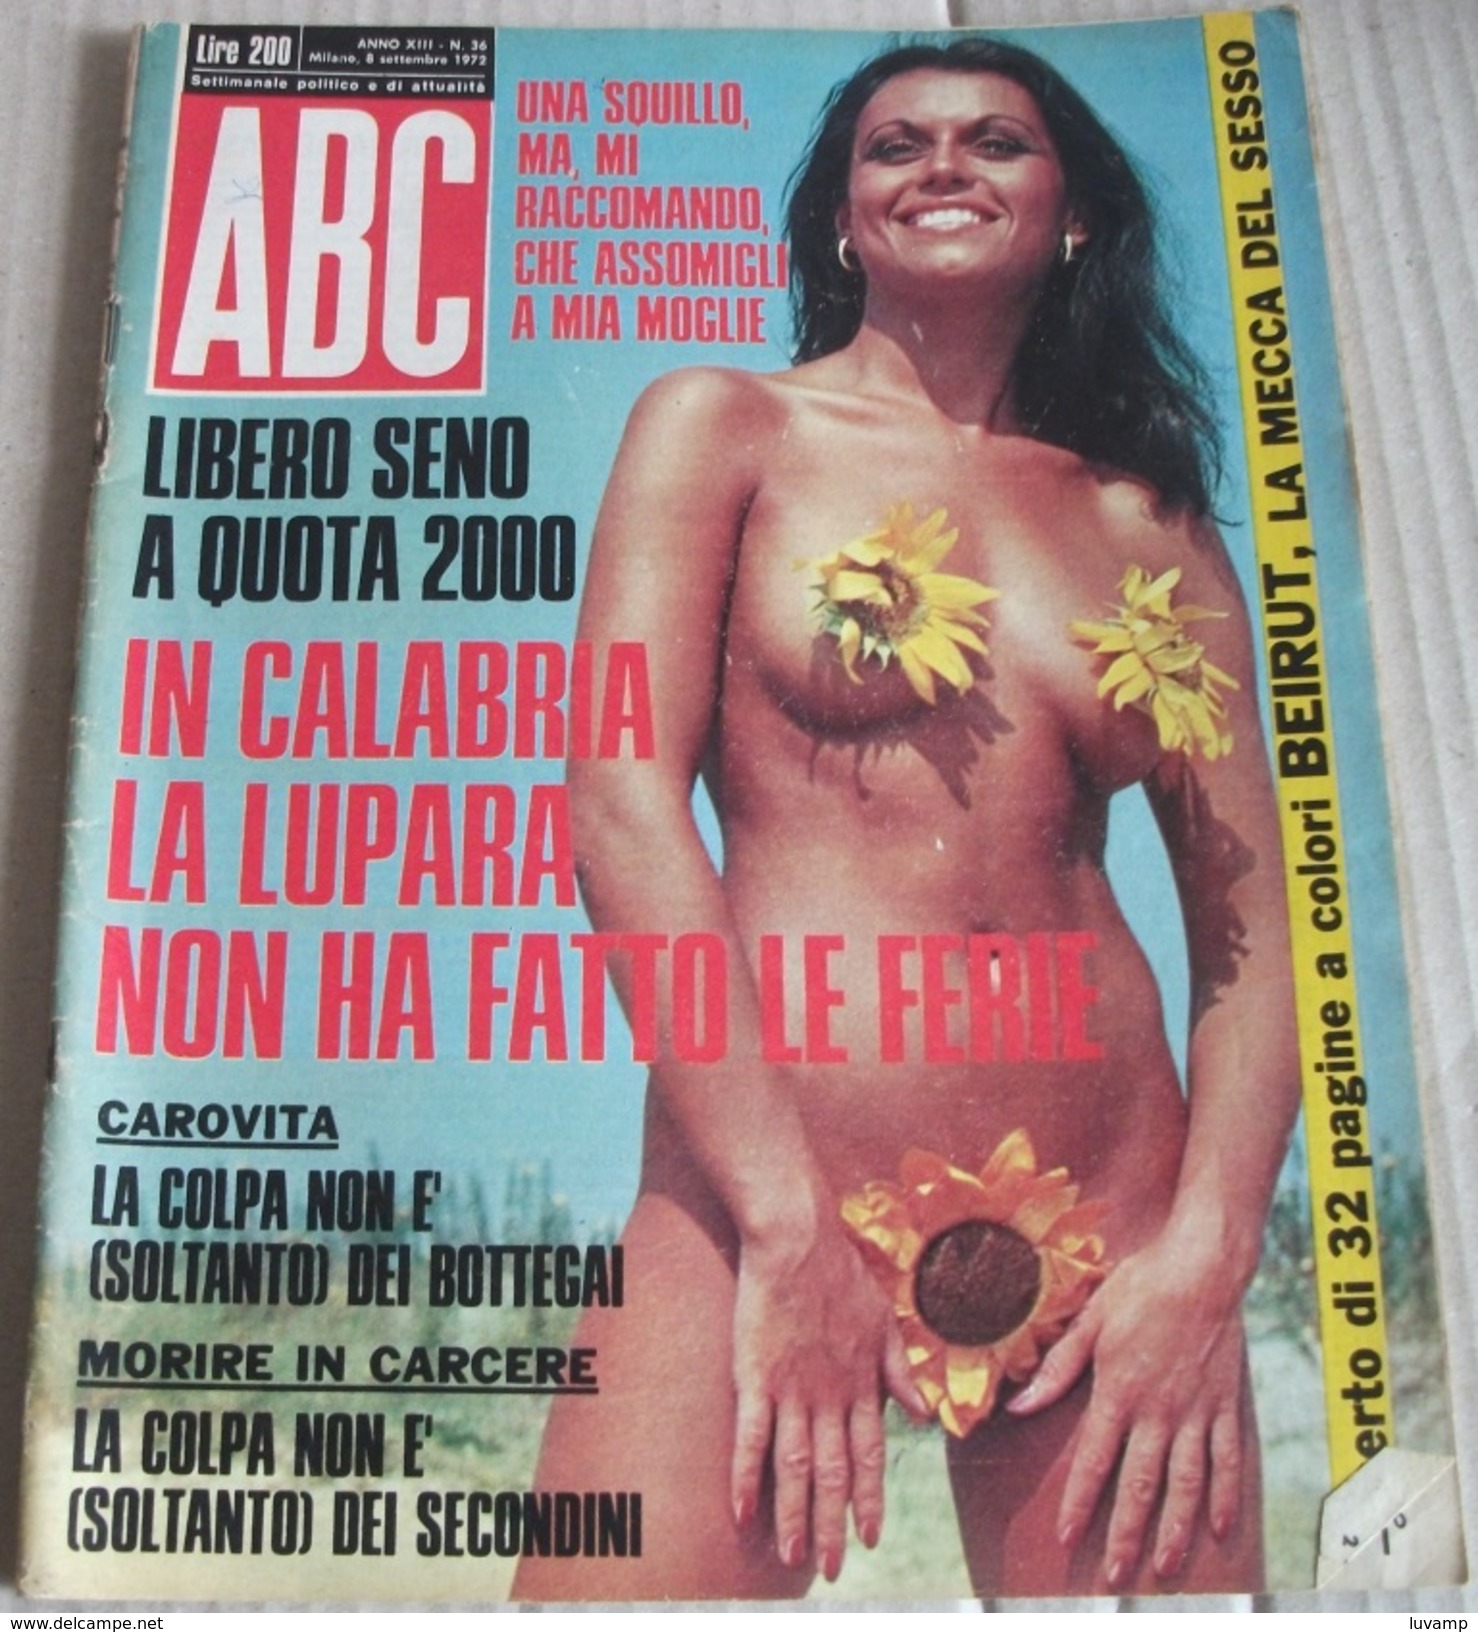 ABC- ATTUALITà E COSTUMI - N. 36 DEL 8 SETT. 1972 (240914) - Premières éditions